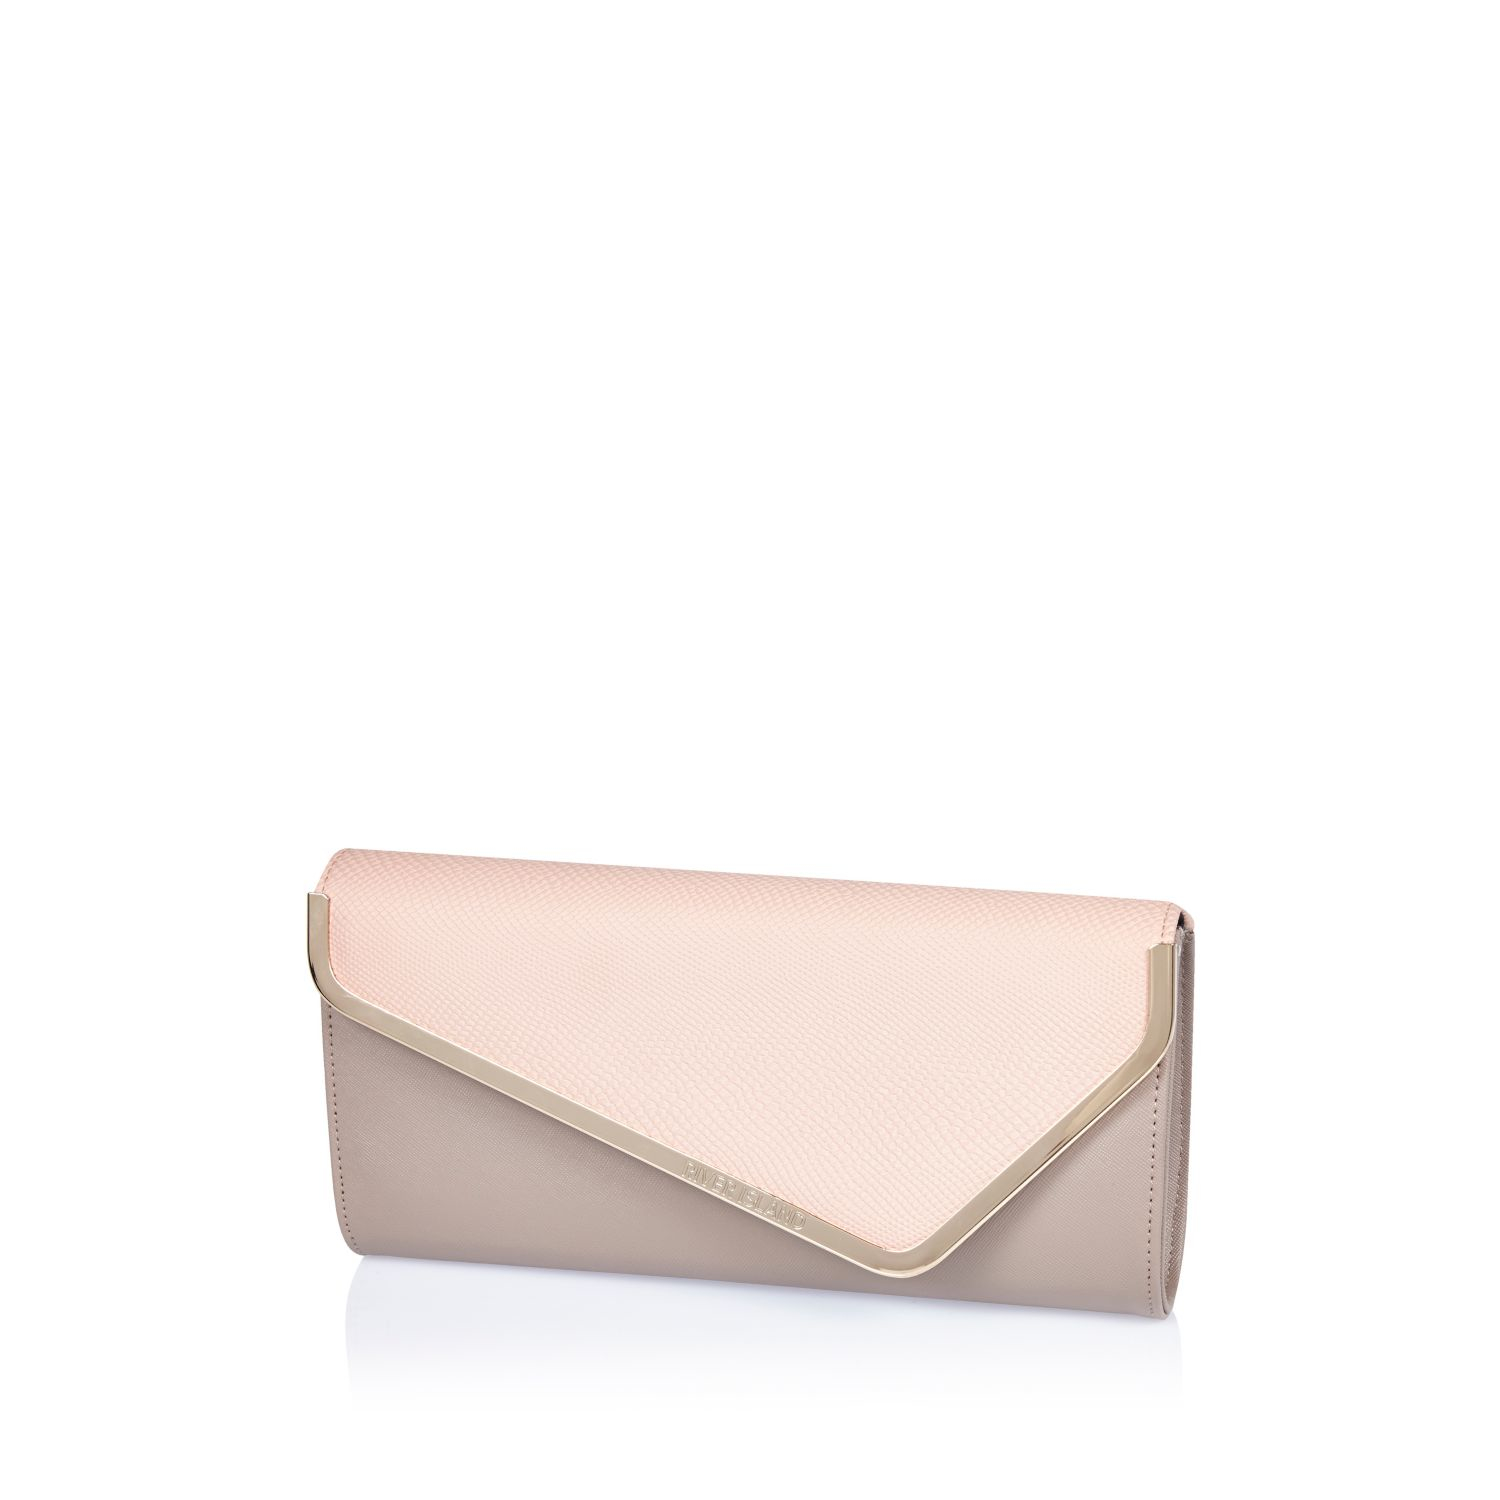 River island Light Pink Envelope Clutch Handbag in Pink | Lyst